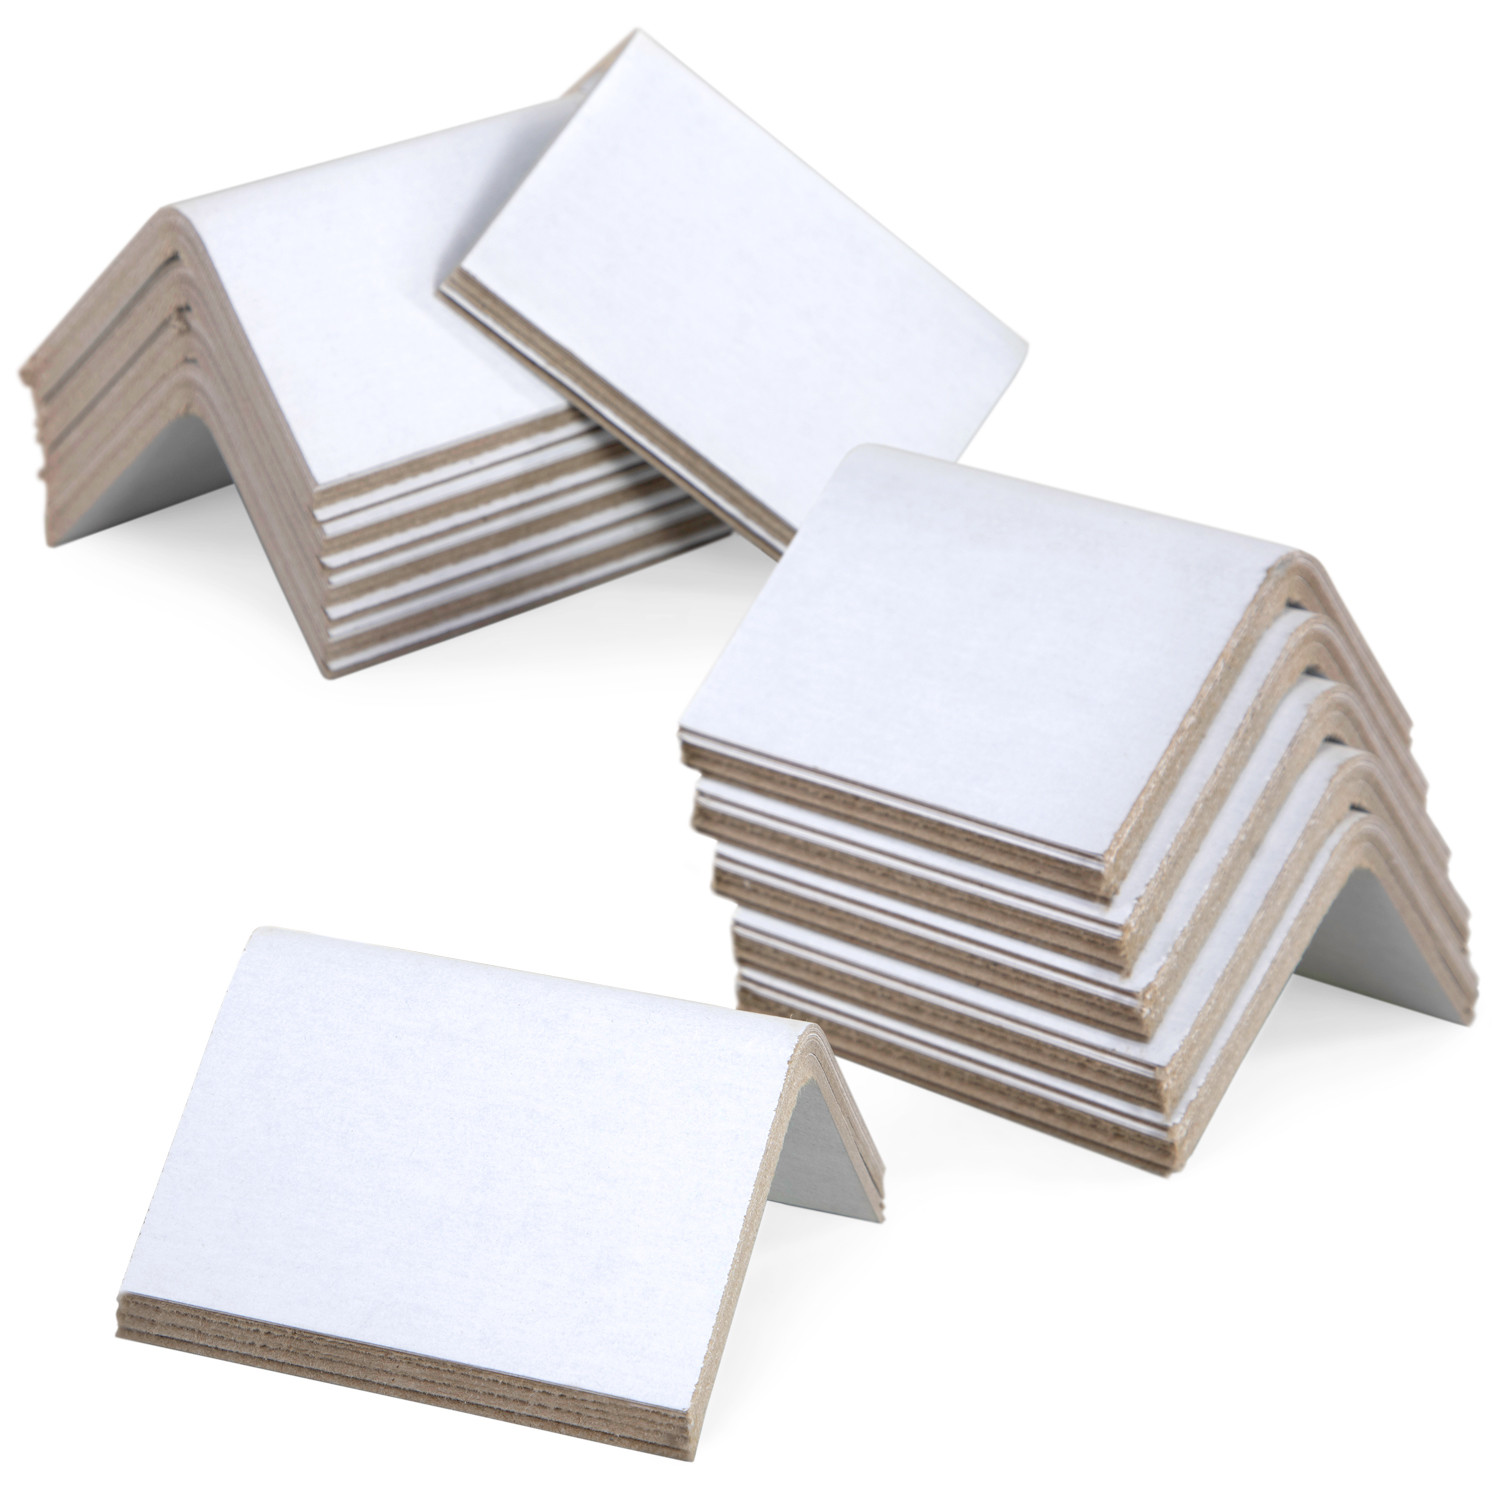 Cardboard Edge Protector 2 x 2 x 18, Pack of 50 V-Board Reinforced Cardboard Corners for Shipping White Kraft Cardboard Corners for Packing Moving